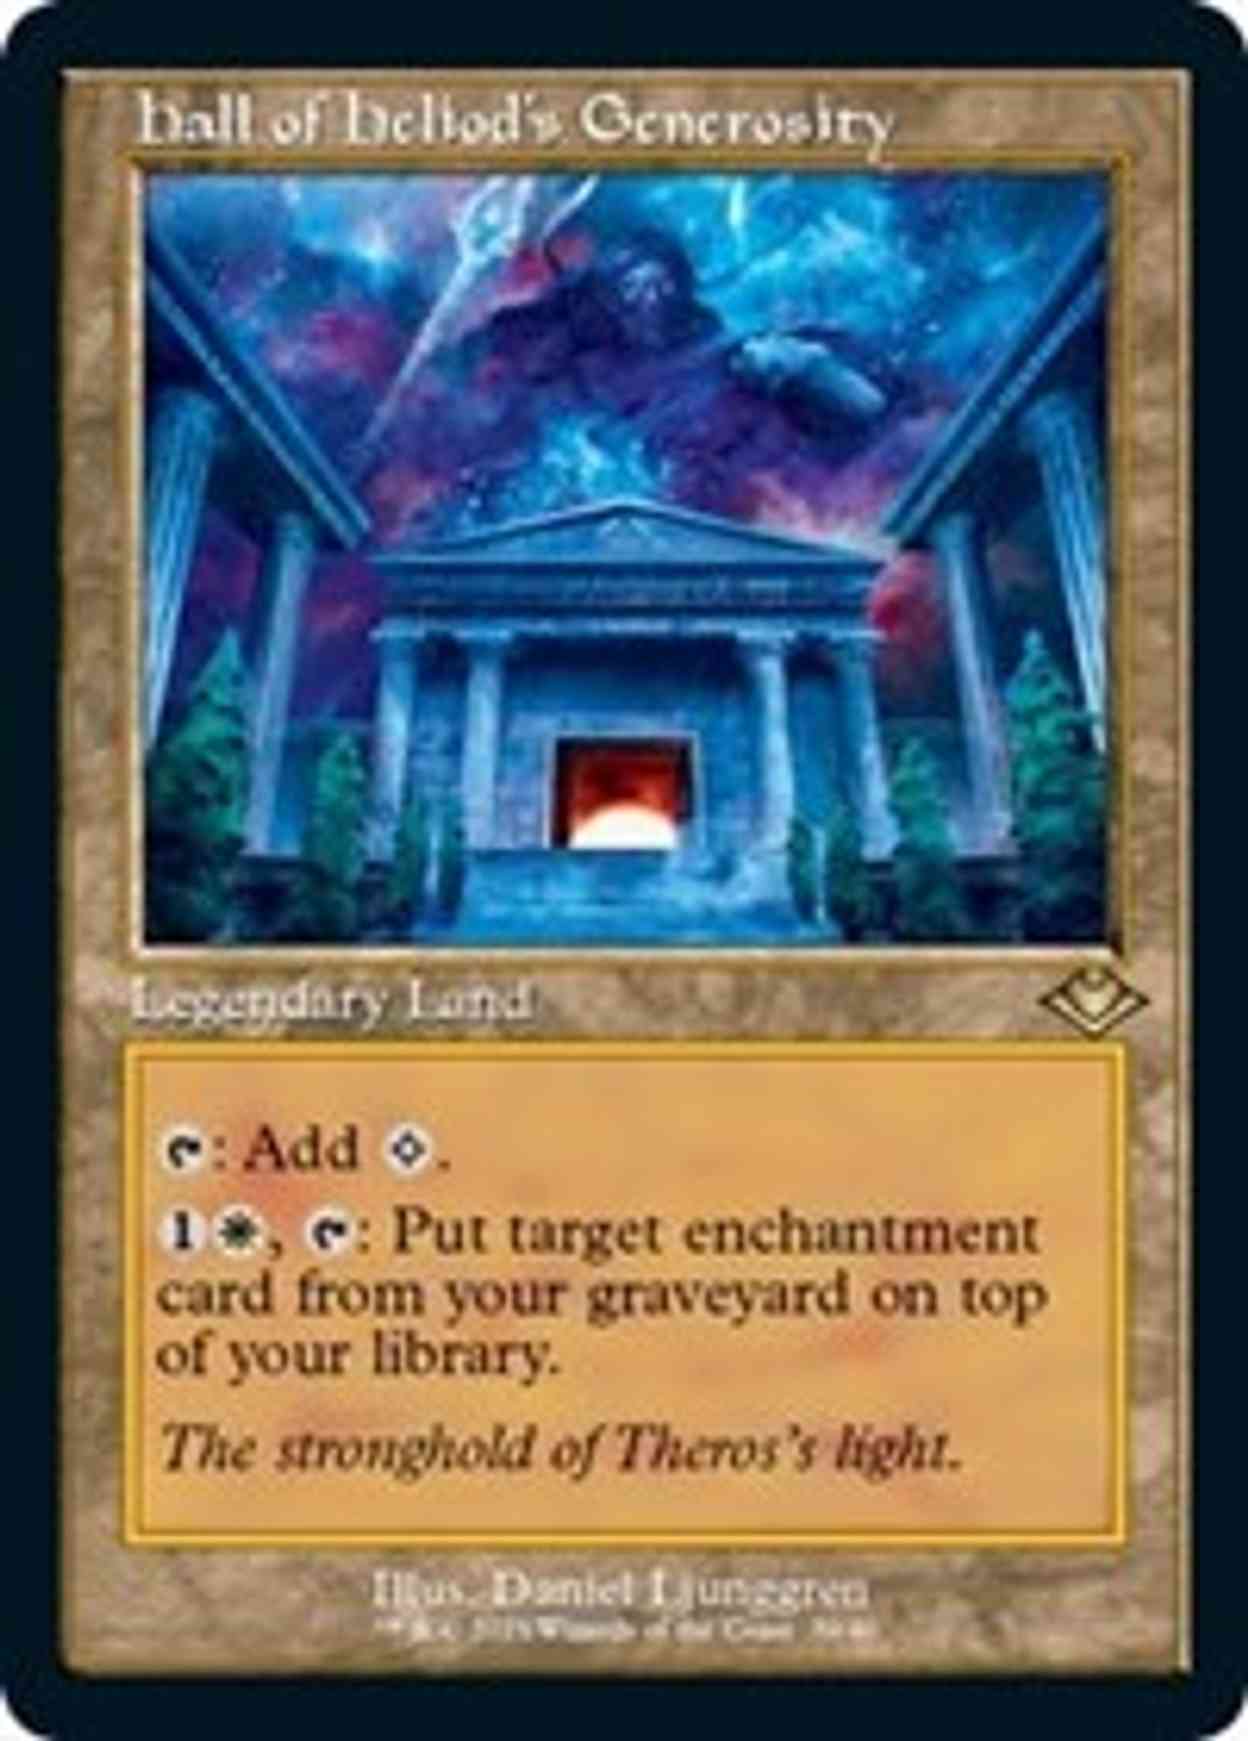 Hall of Heliod's Generosity (Retro Frame) magic card front